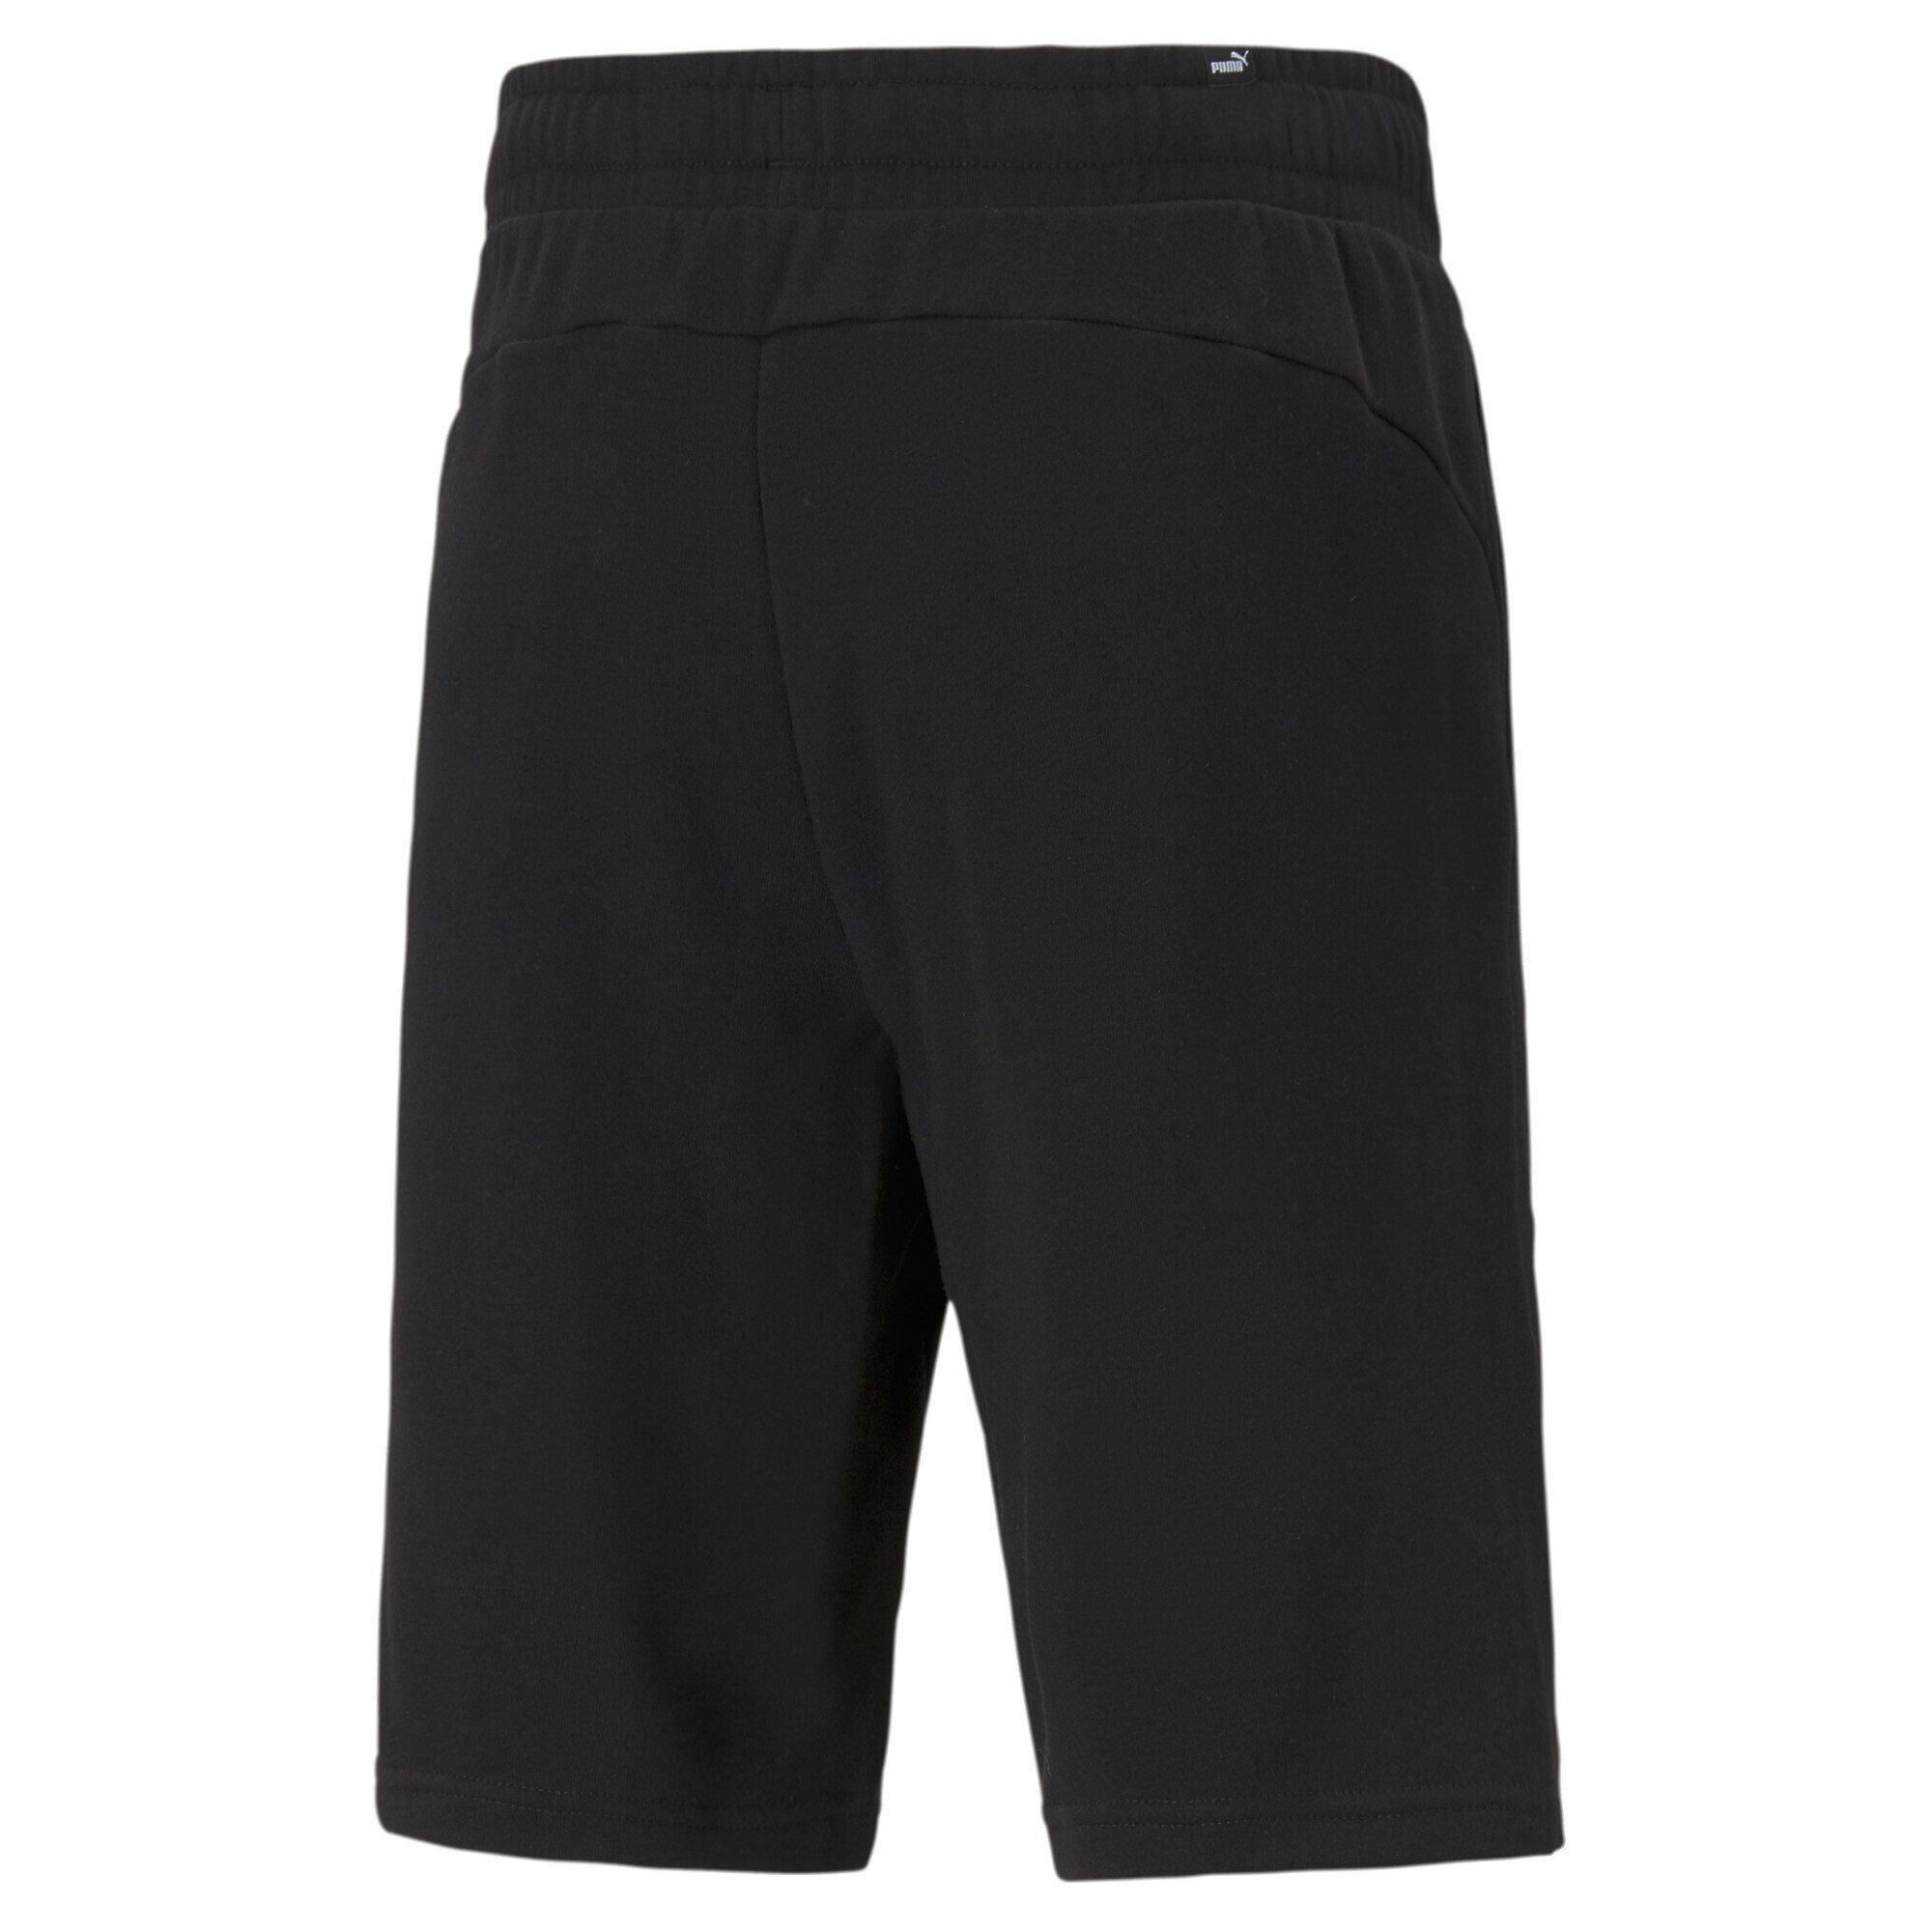 Black Herren Essentials Sporthose PUMA Shorts